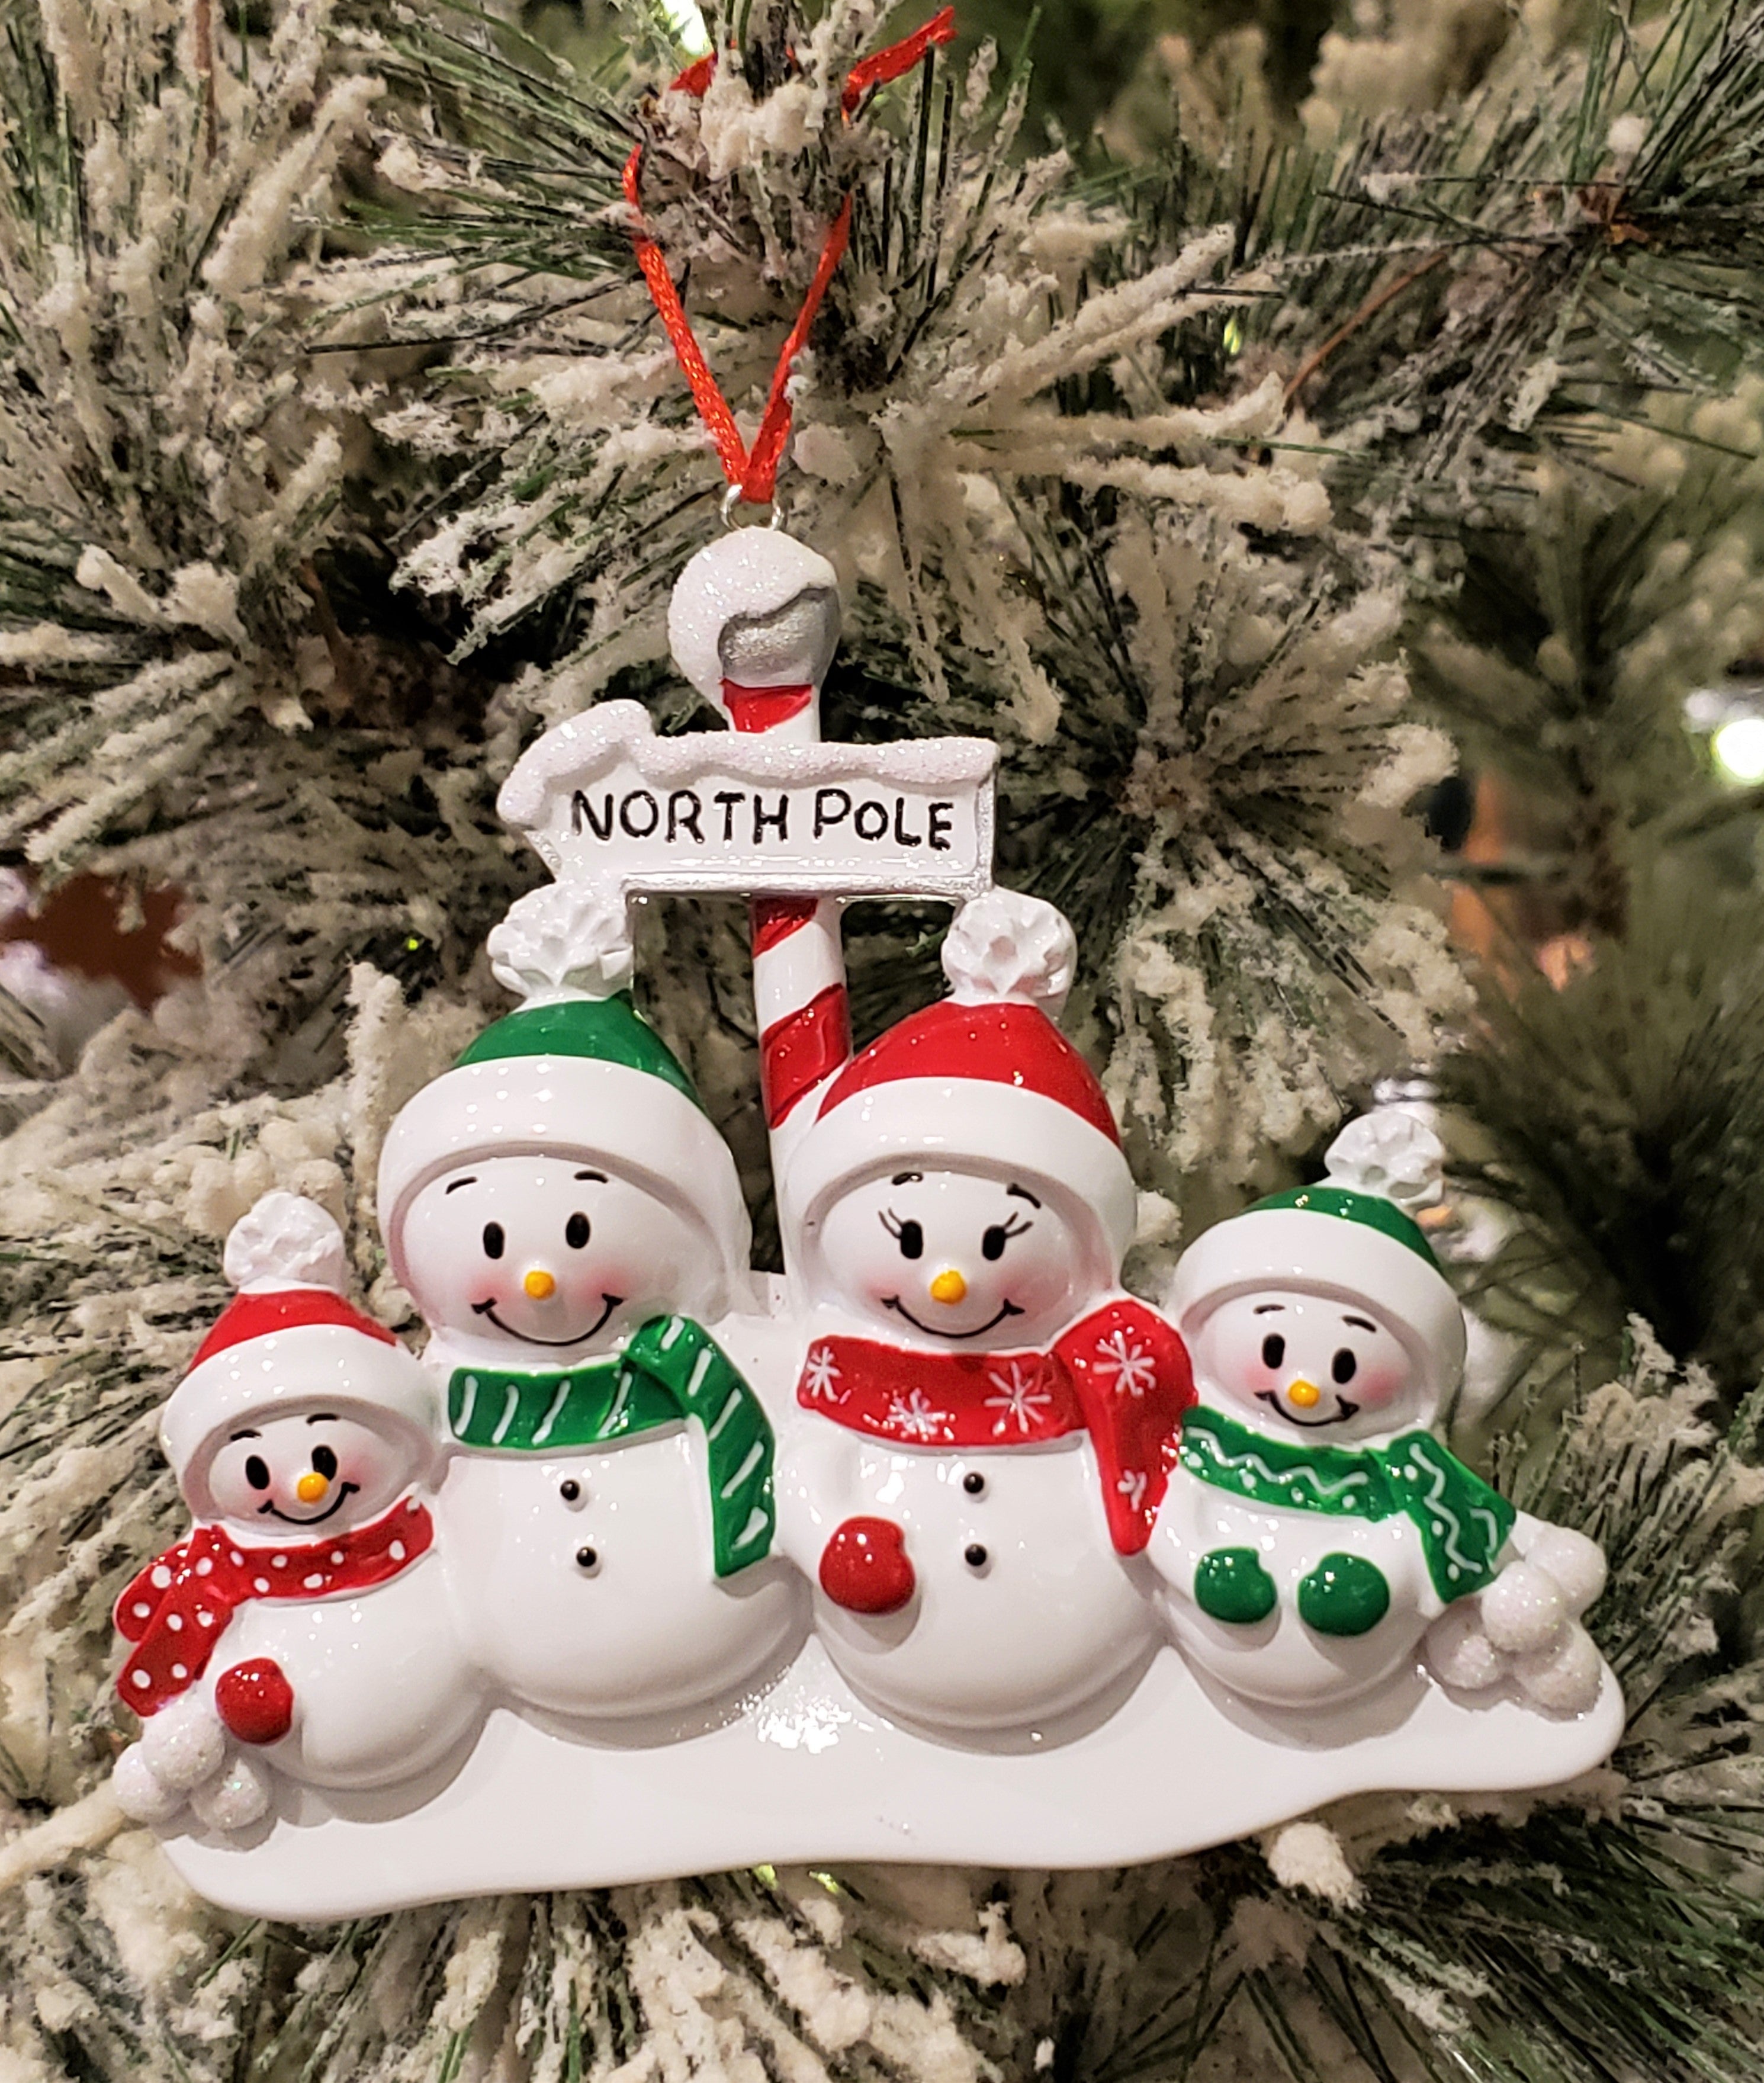 North Pole Ornament Family of 4 Personalized Ornament